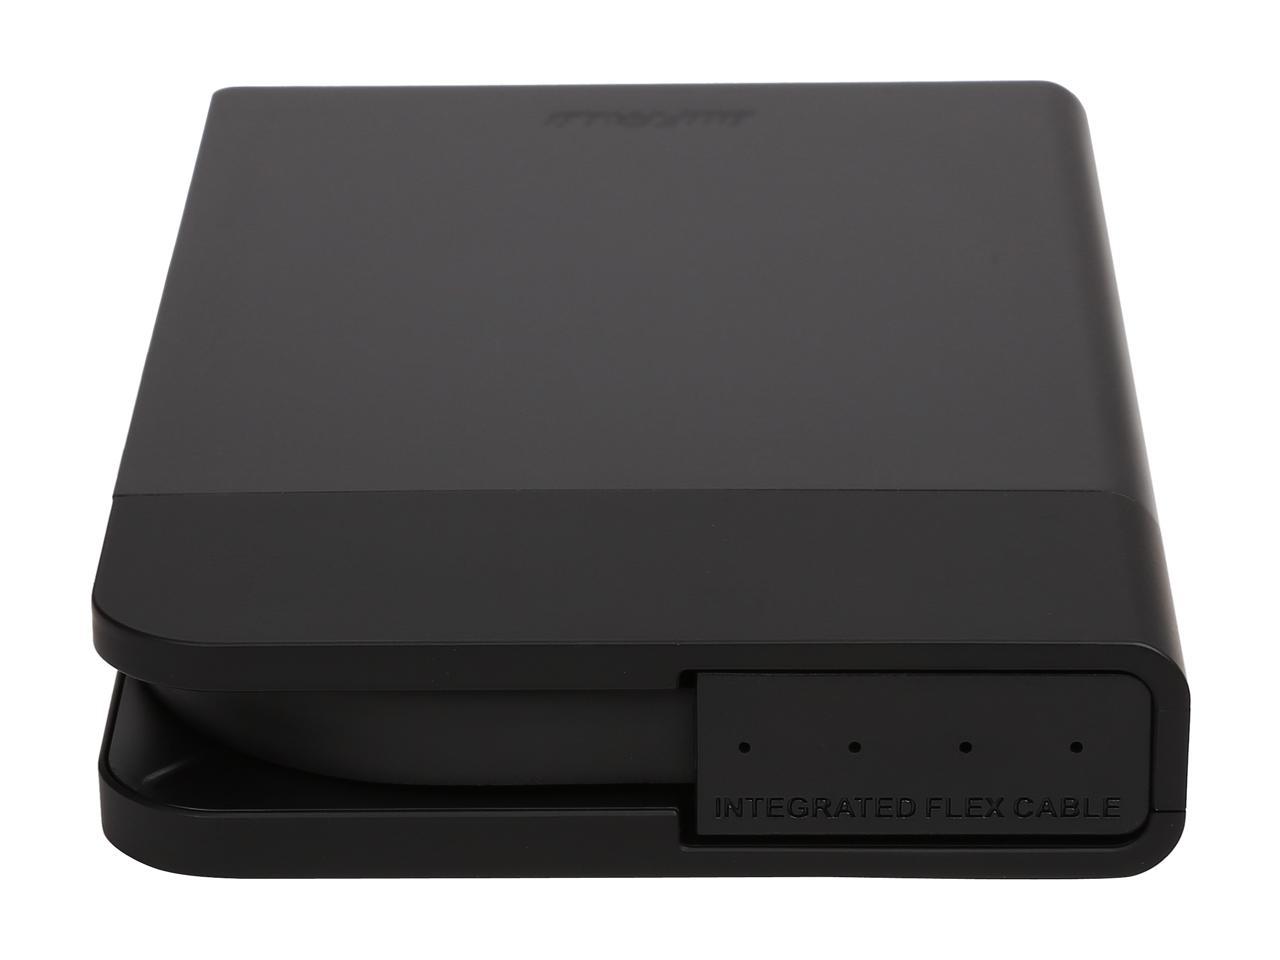 BUFFALO 1TB MiniStation Extreme NFC Portable Hard Drive USB 3.0 Micro-B Model HD-PZN1.0U3B Black